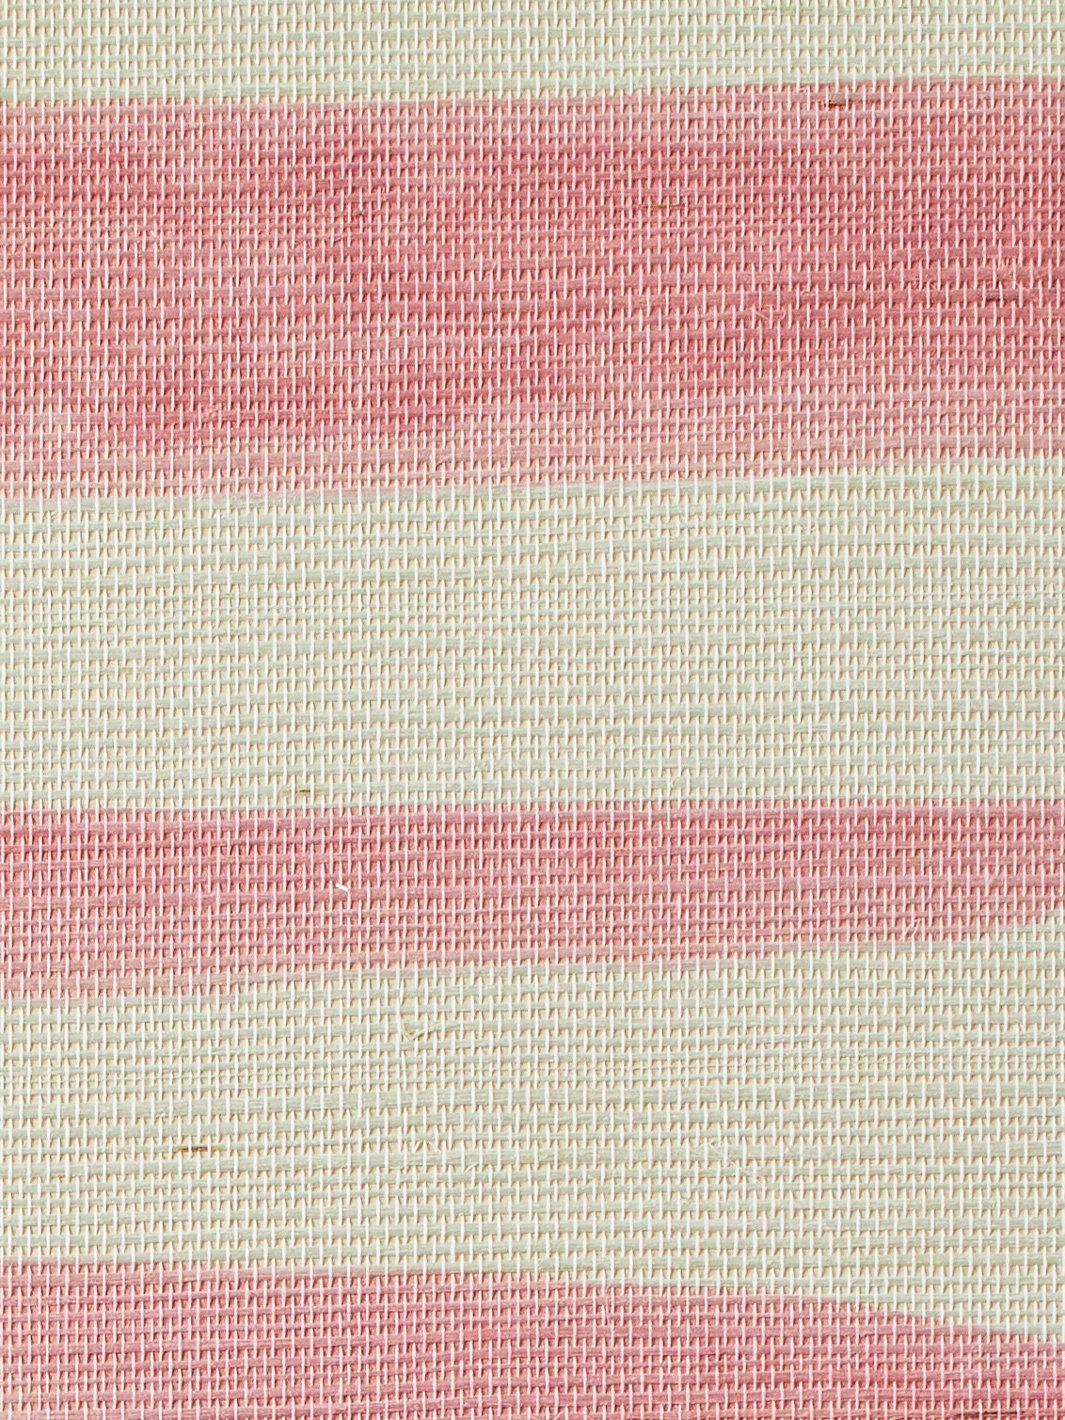 'Watercolor Weave Large' Grasscloth' Wallpaper by Wallshoppe - Pink